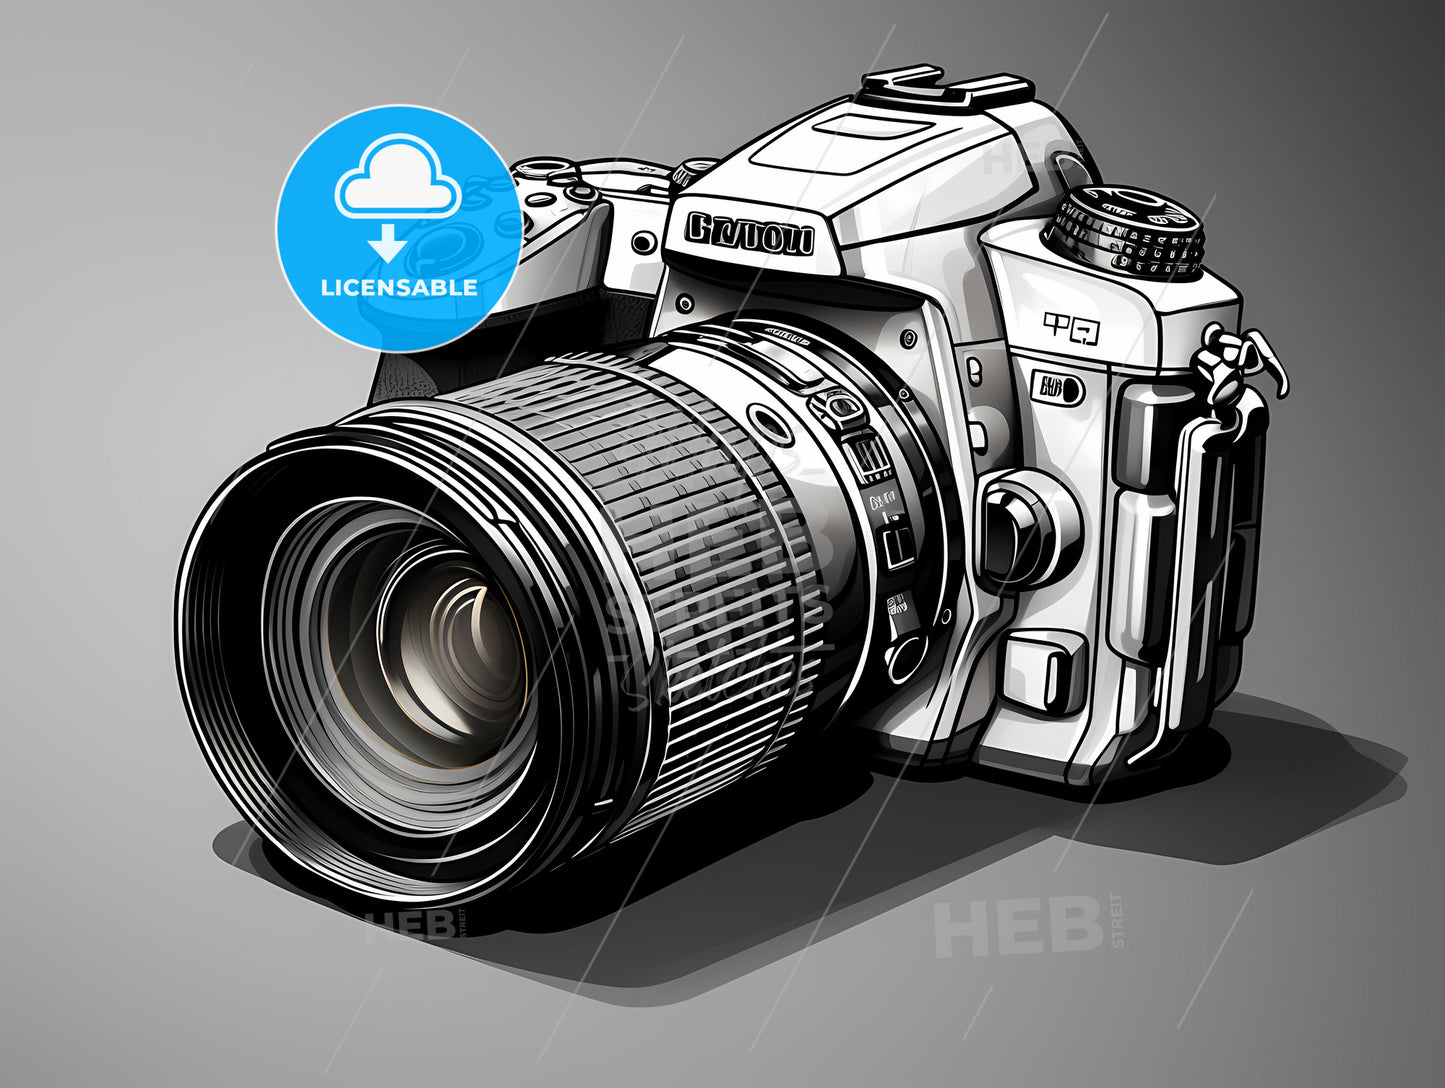 Rough Sketch Of A Dslr Camera, A Digital Camera With A Large Lens